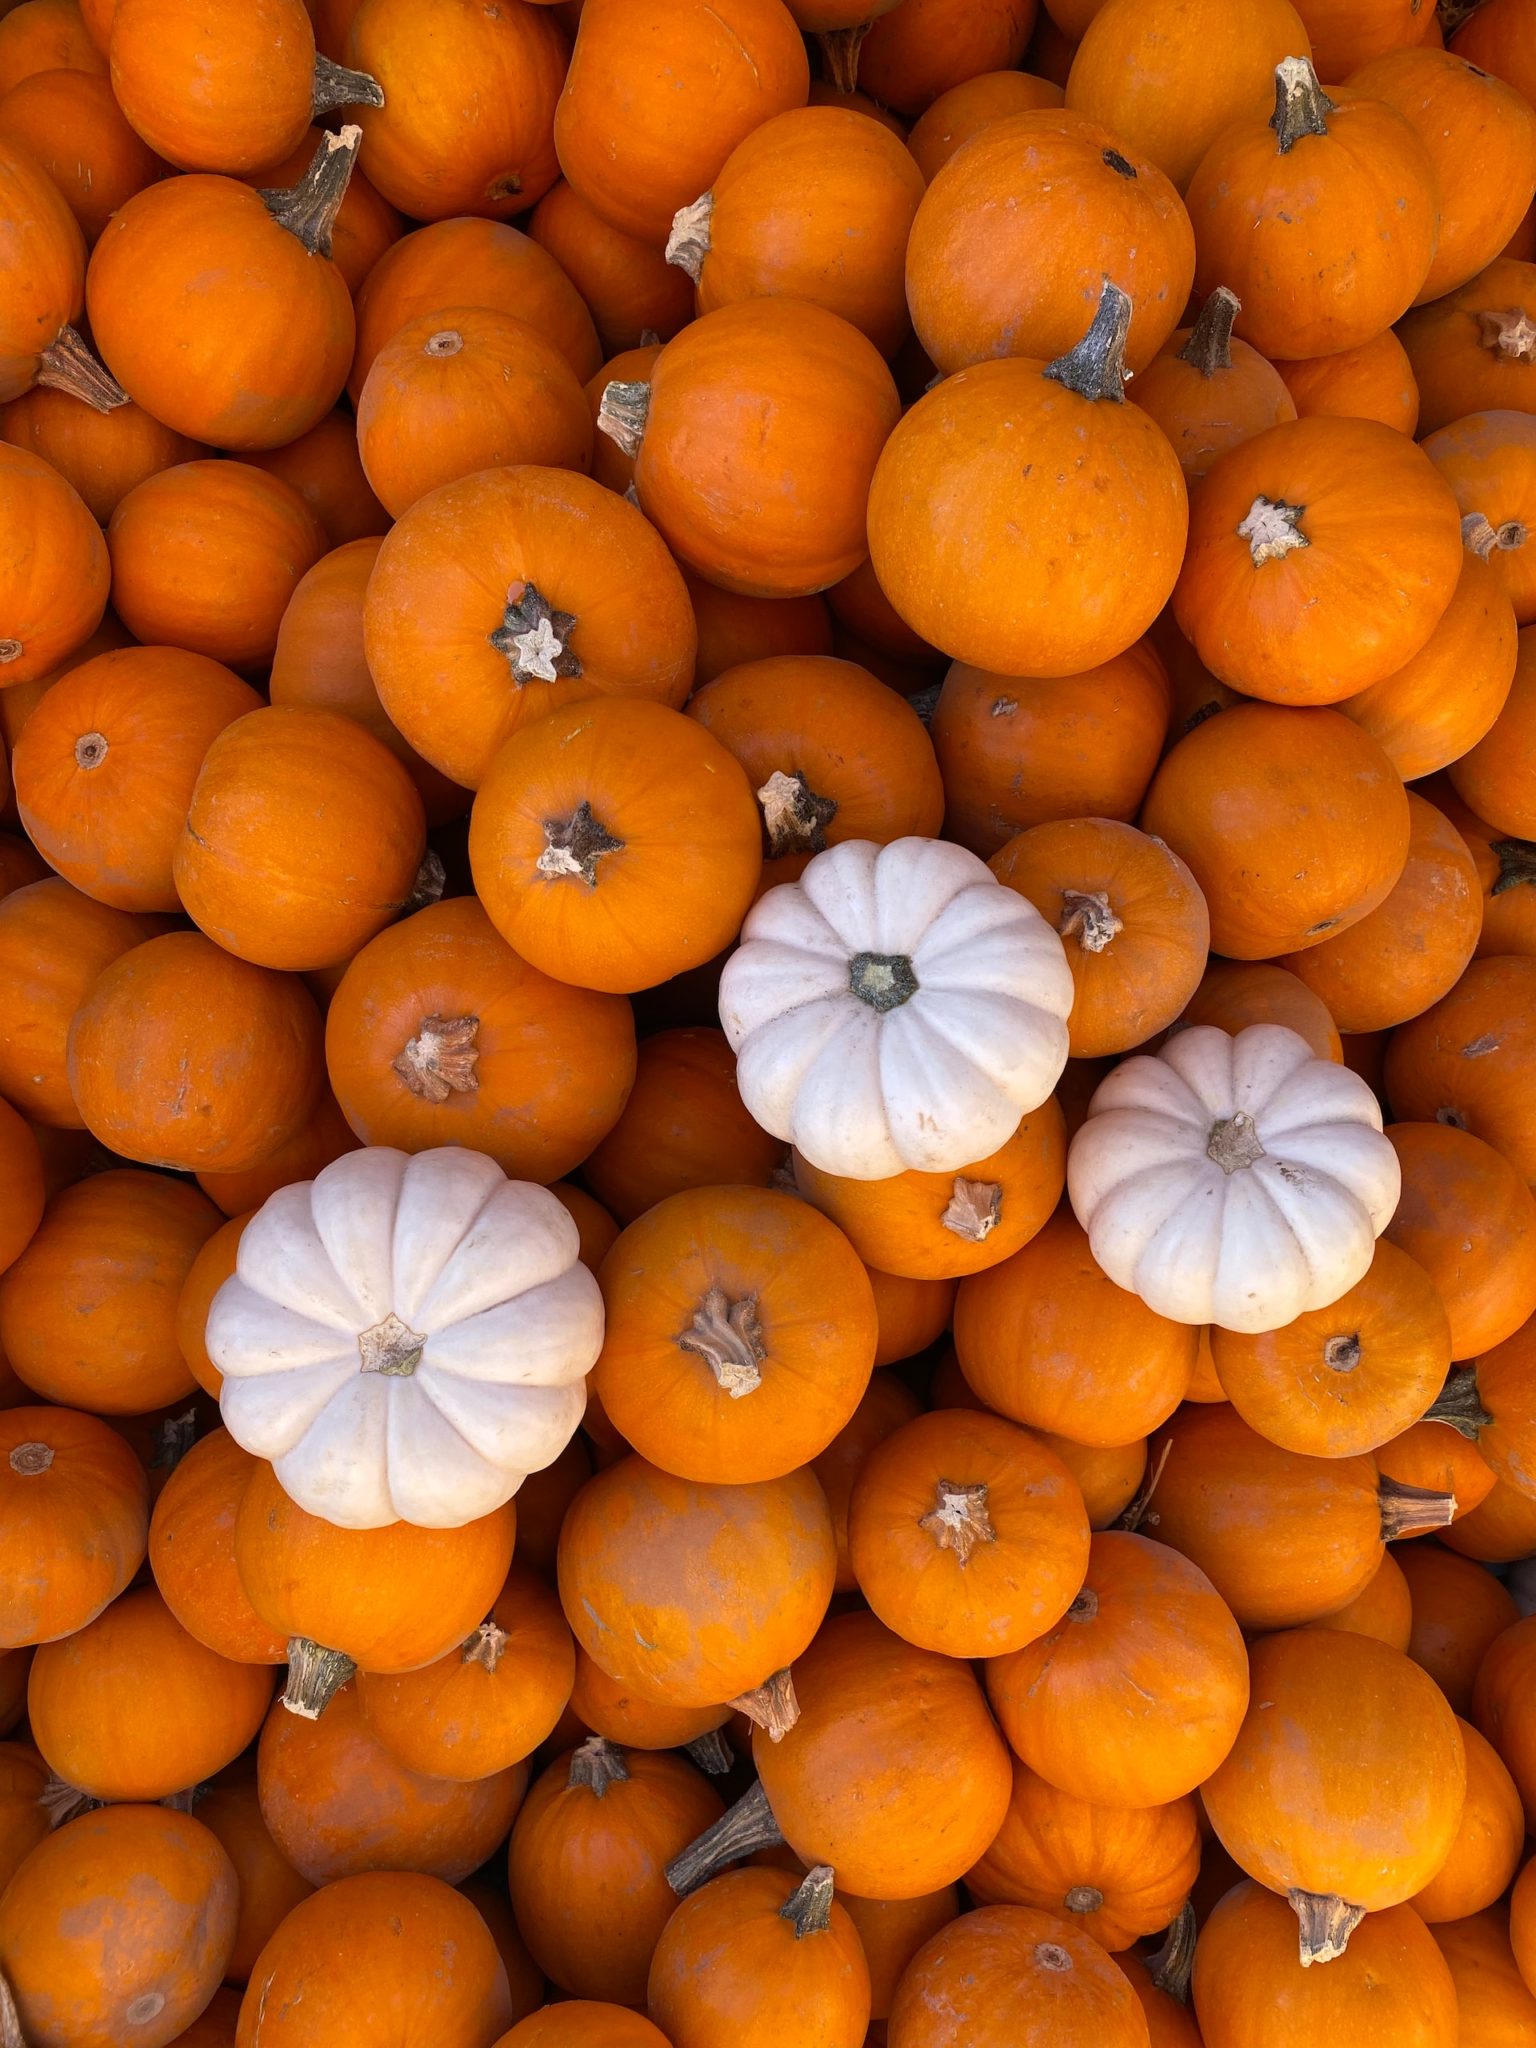 Best Pumpkin Patches In Orange County